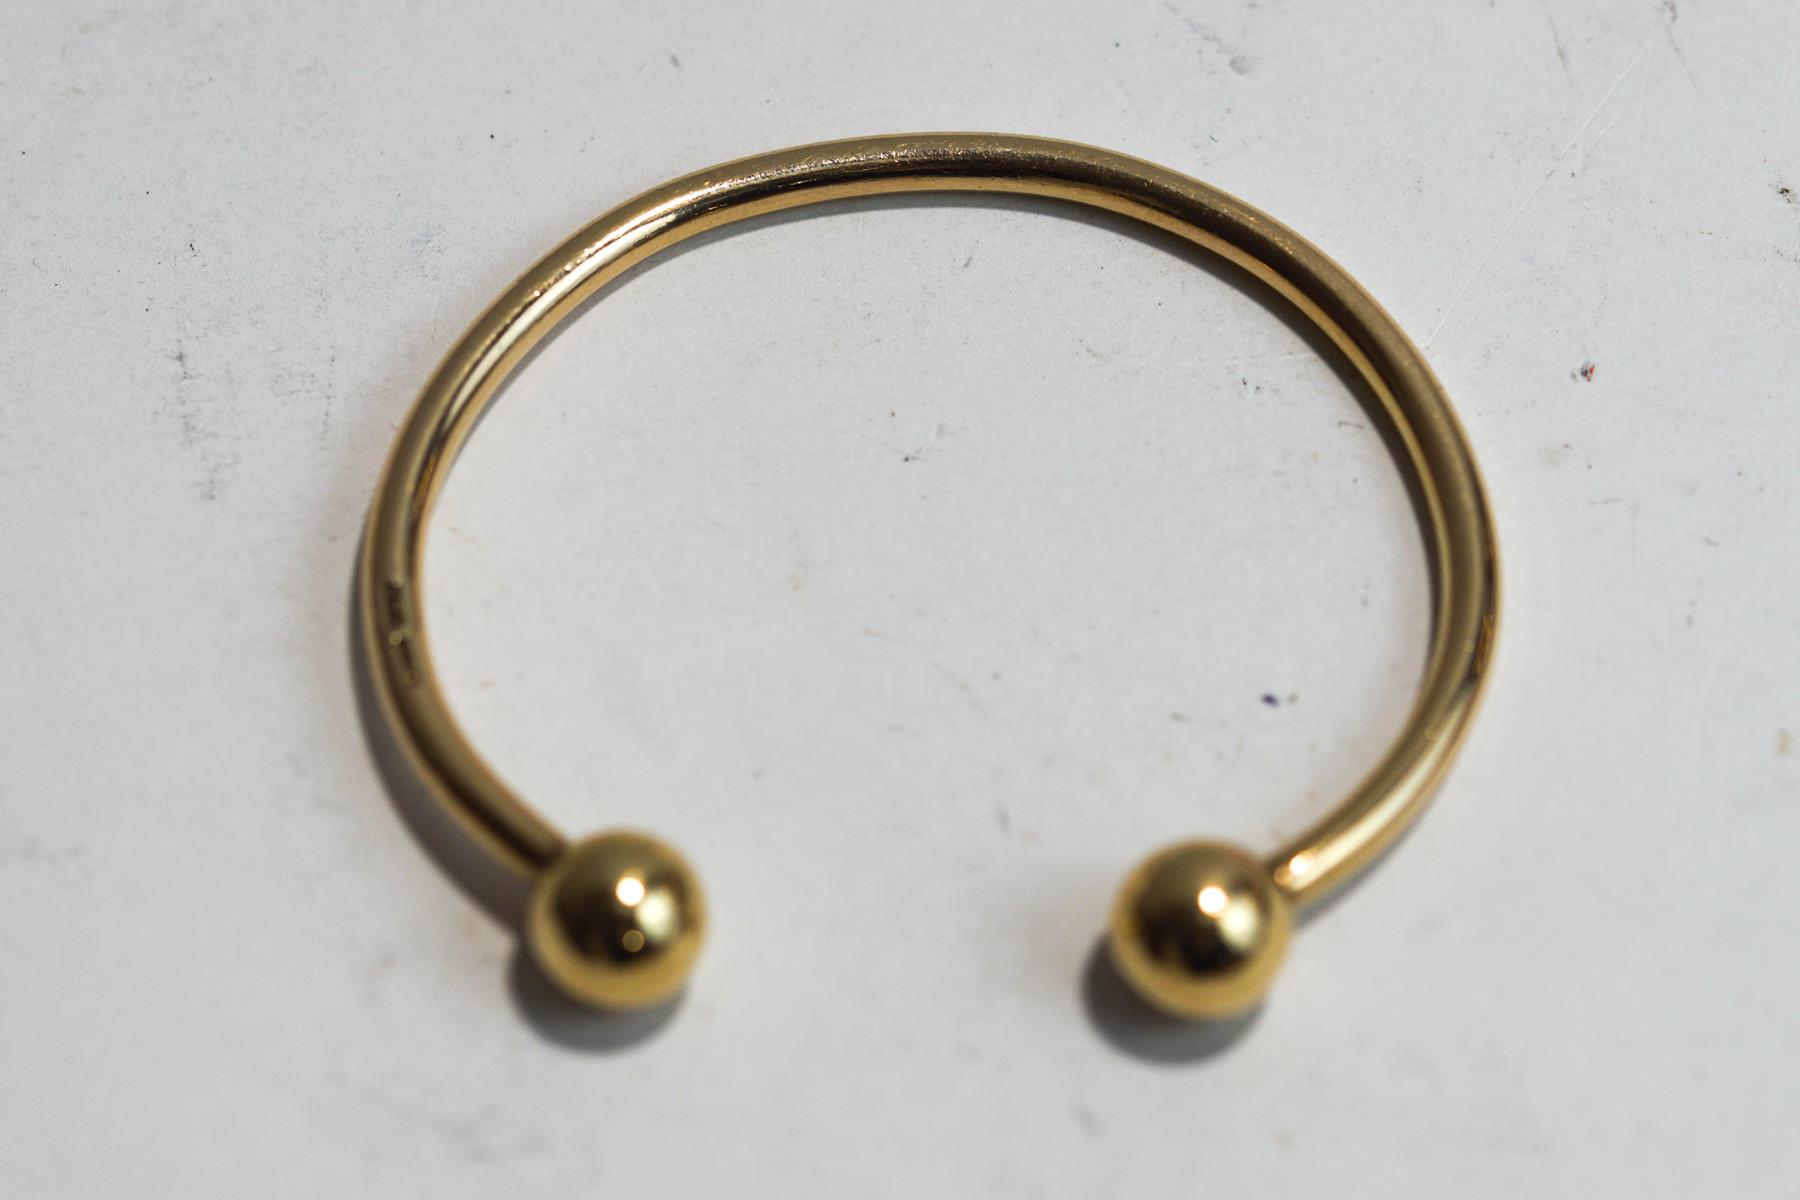 A 9 carat gold torque bangle, internal diameter currently 6.